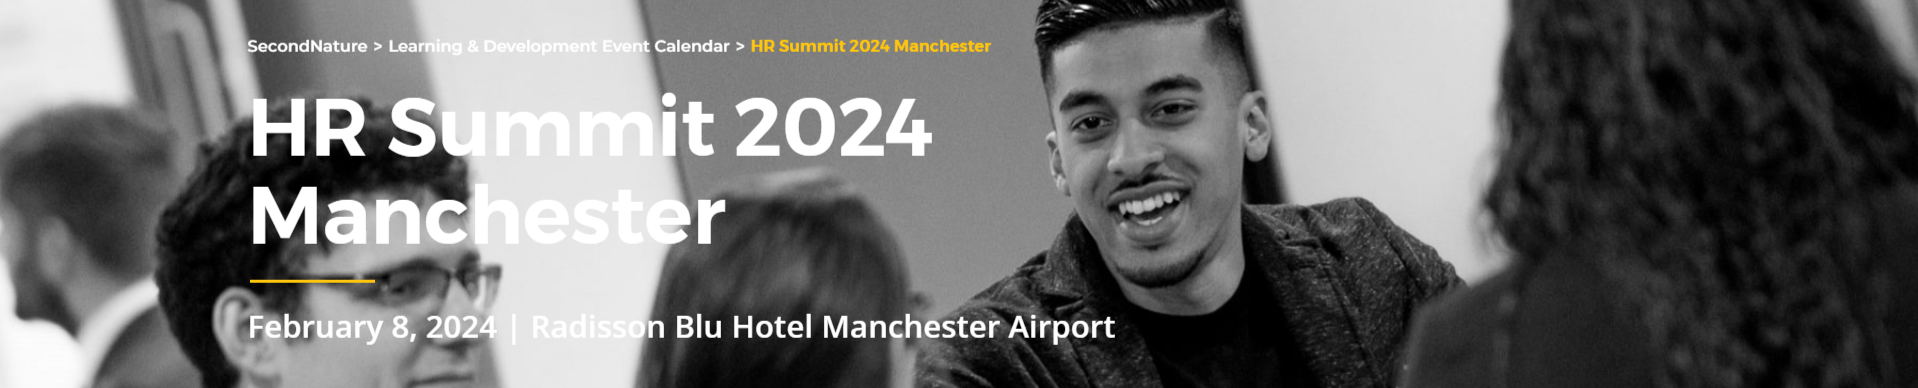 HR-Summit-2024-Manchester.png